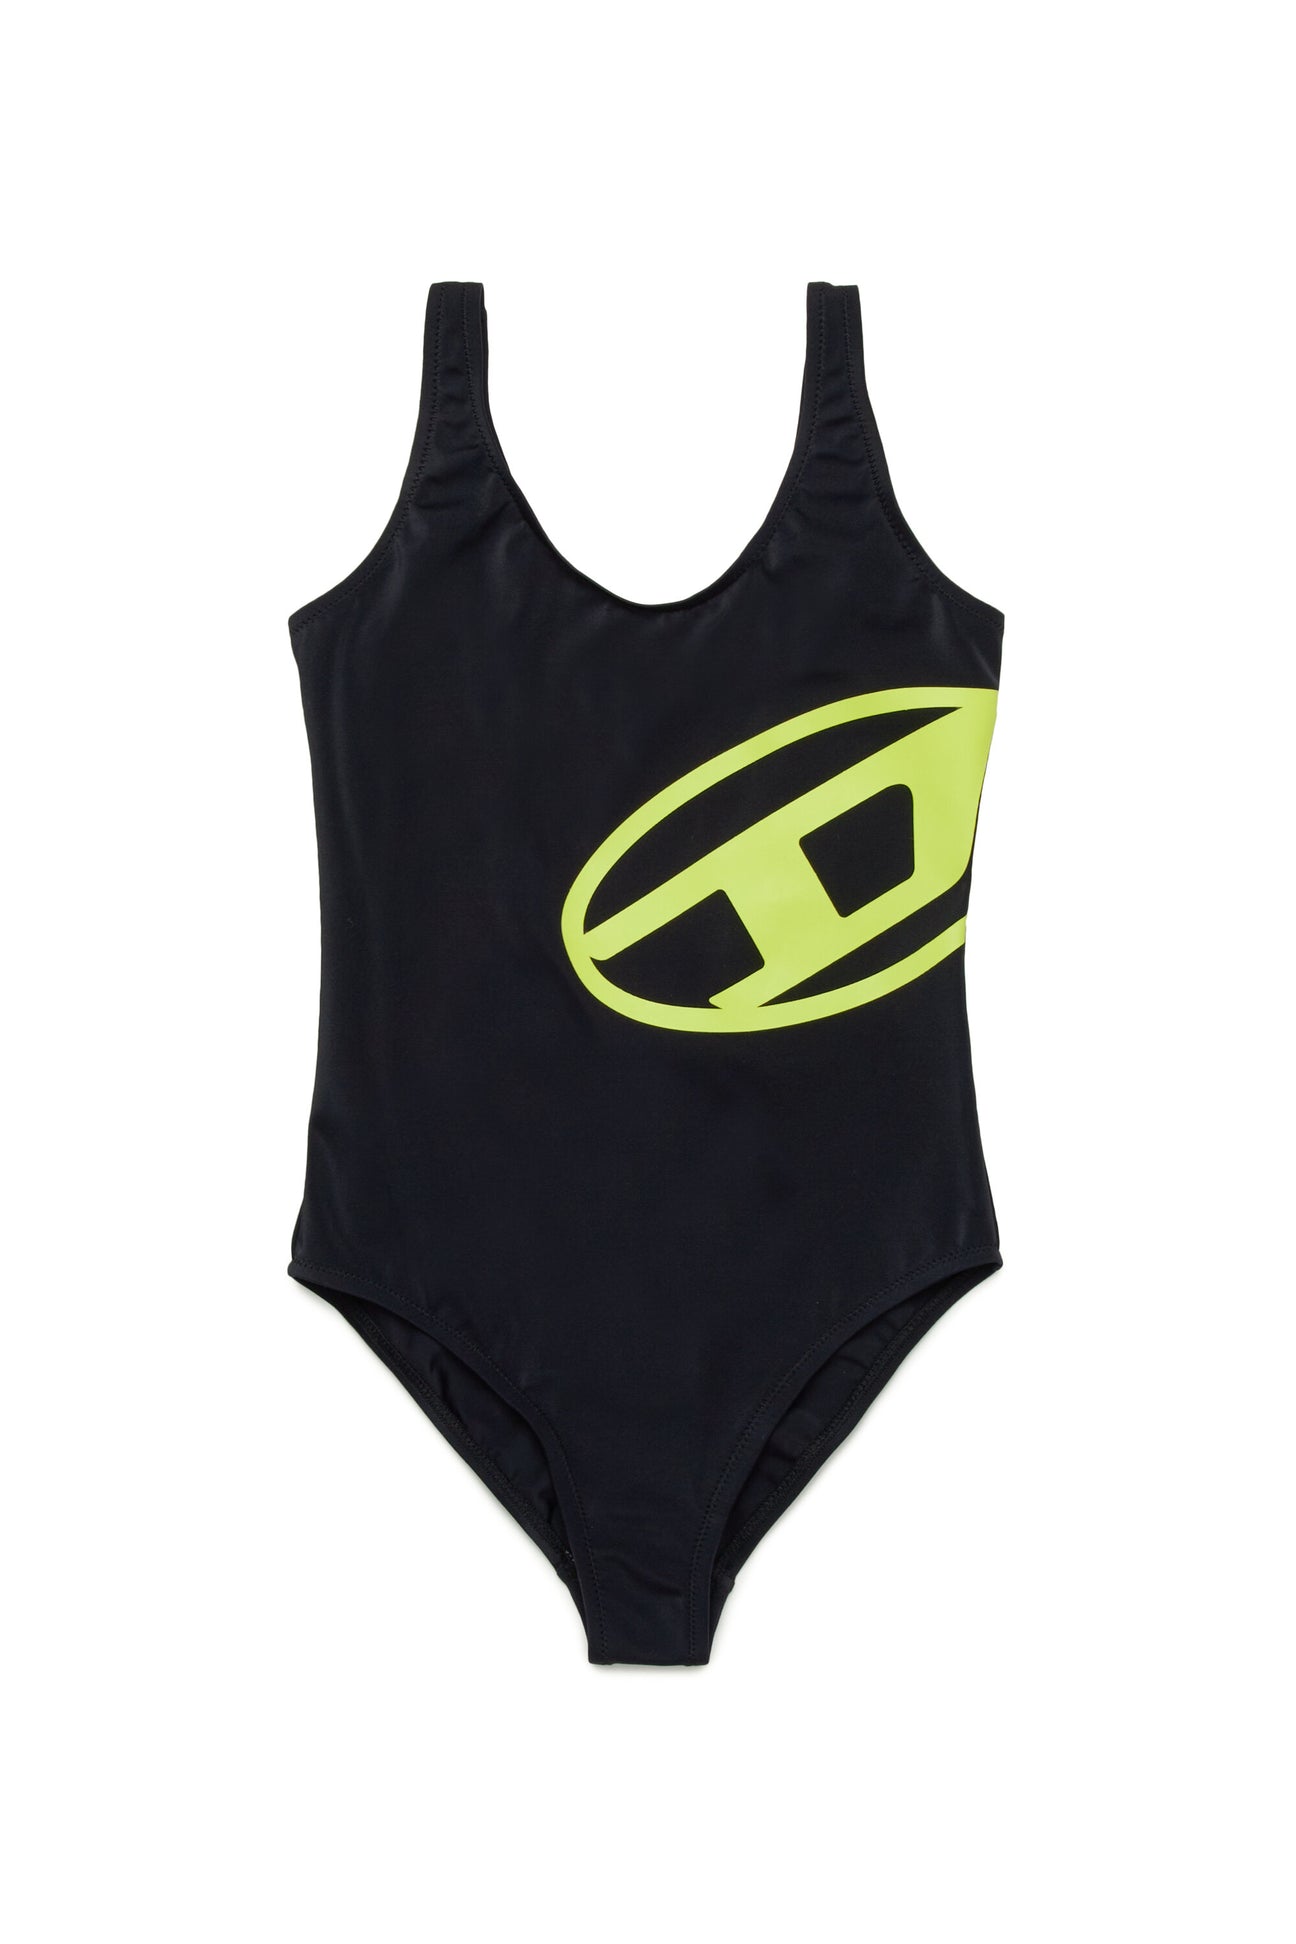 Oval D one-piece swimsuit 